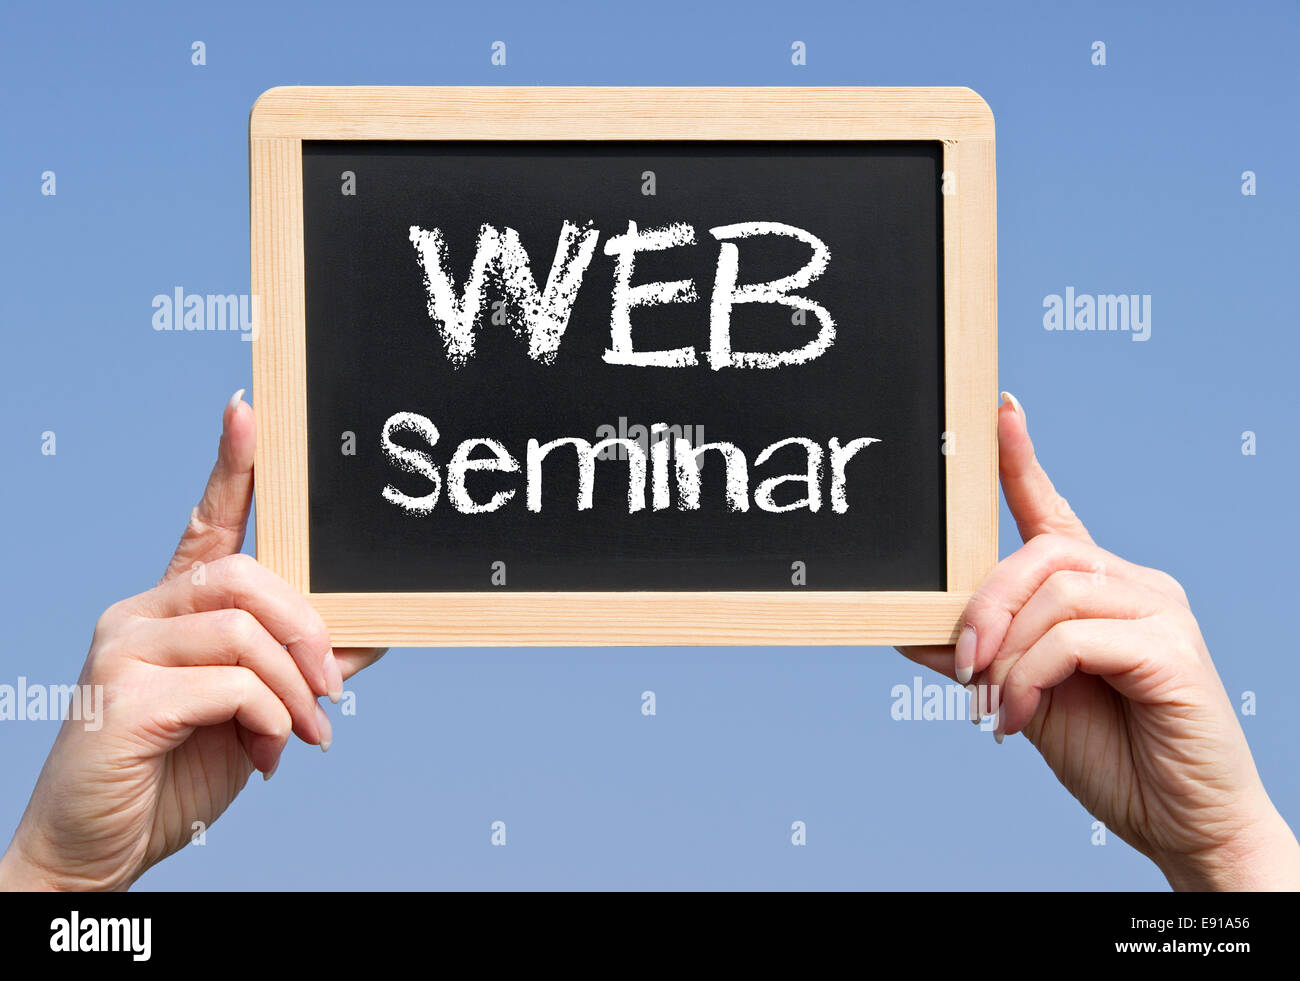 WEB Seminar - Business Concept Stock Photo